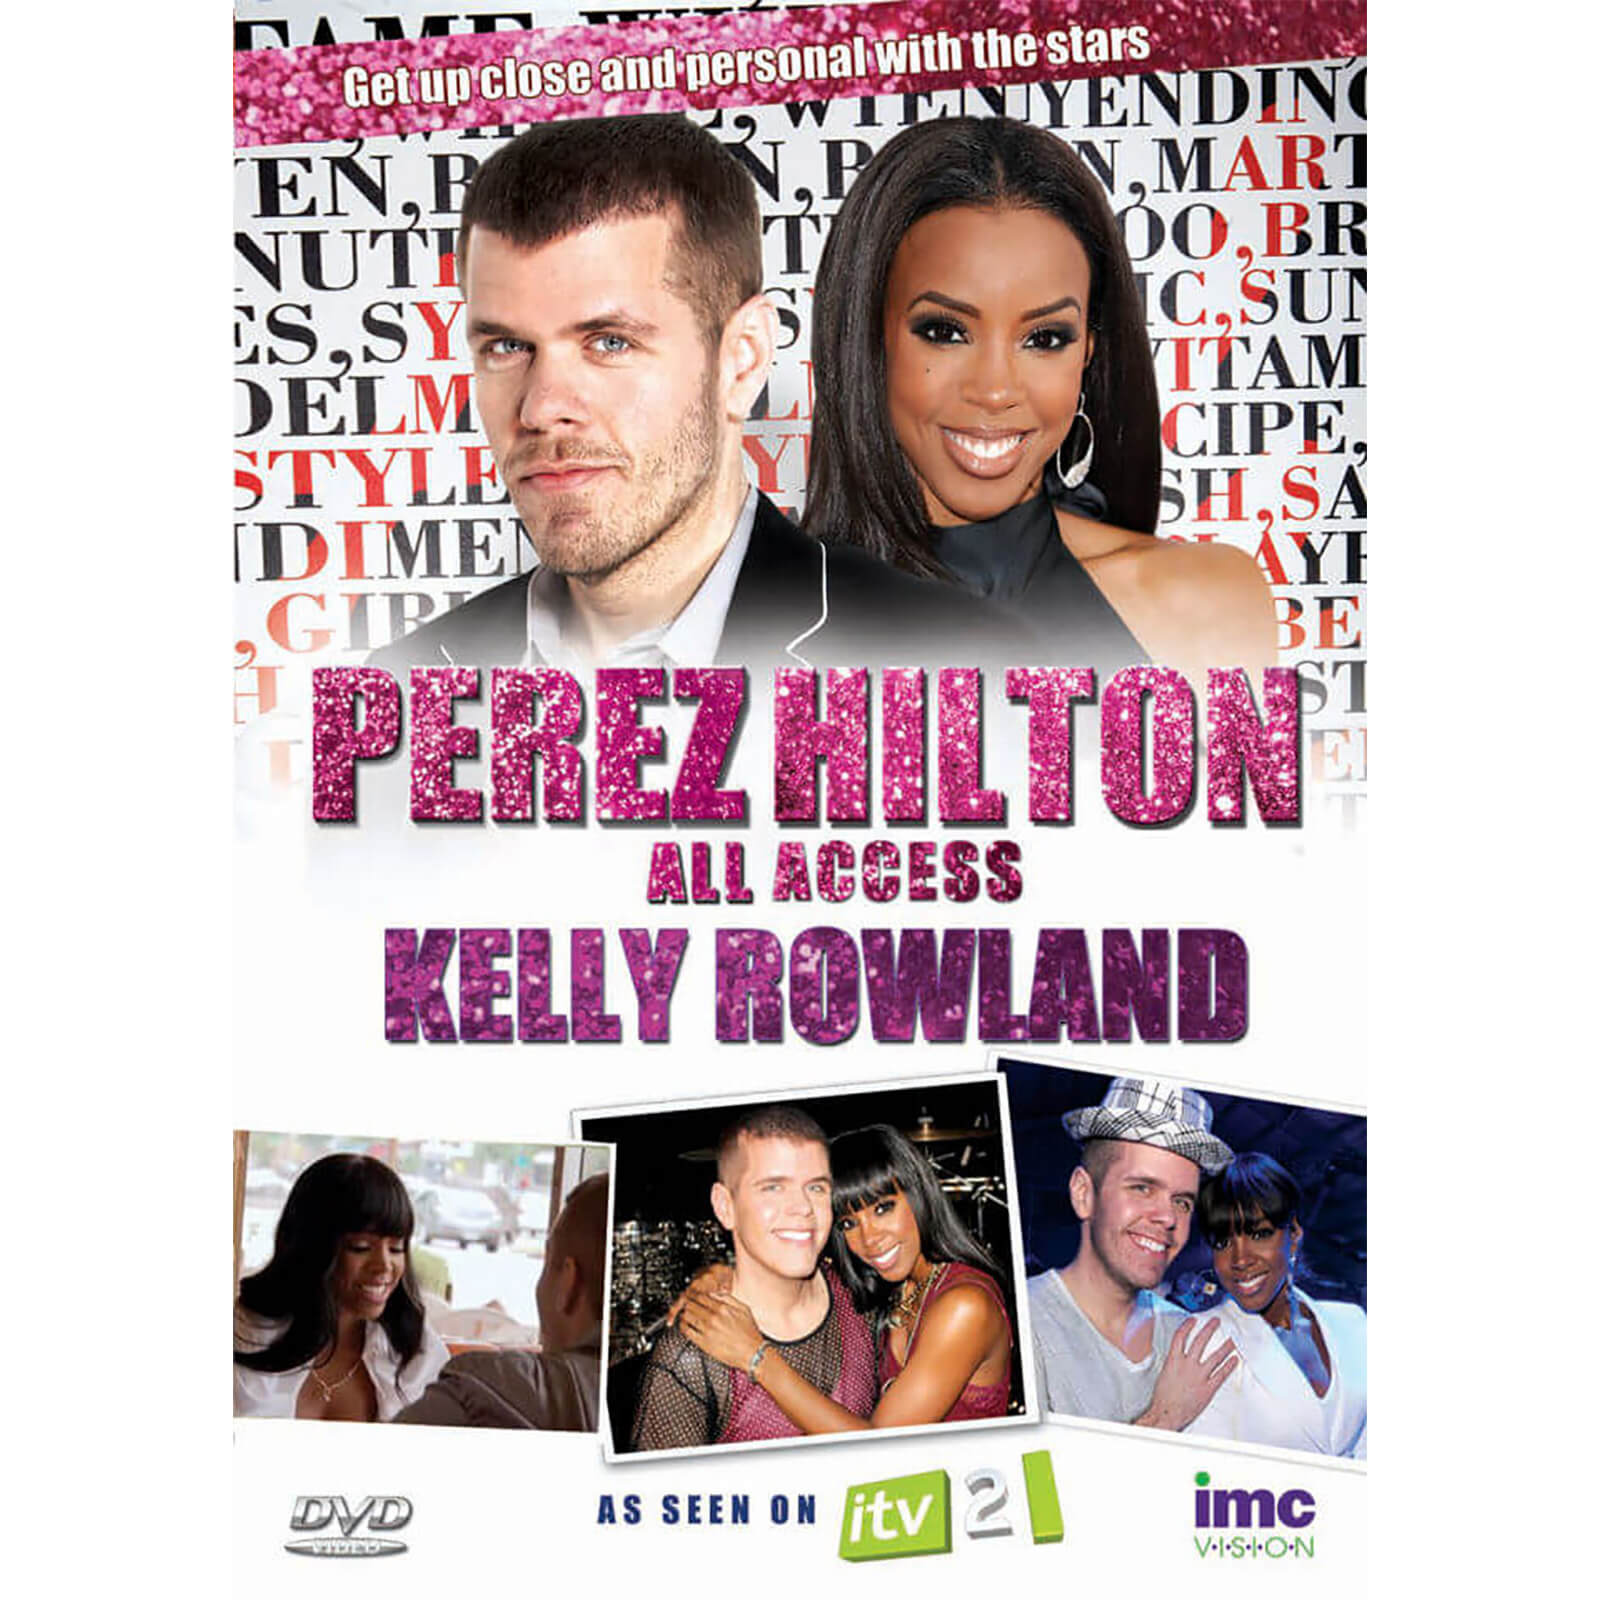 Perez Hilton: All Access - Kelly Rowland von IMC Vision